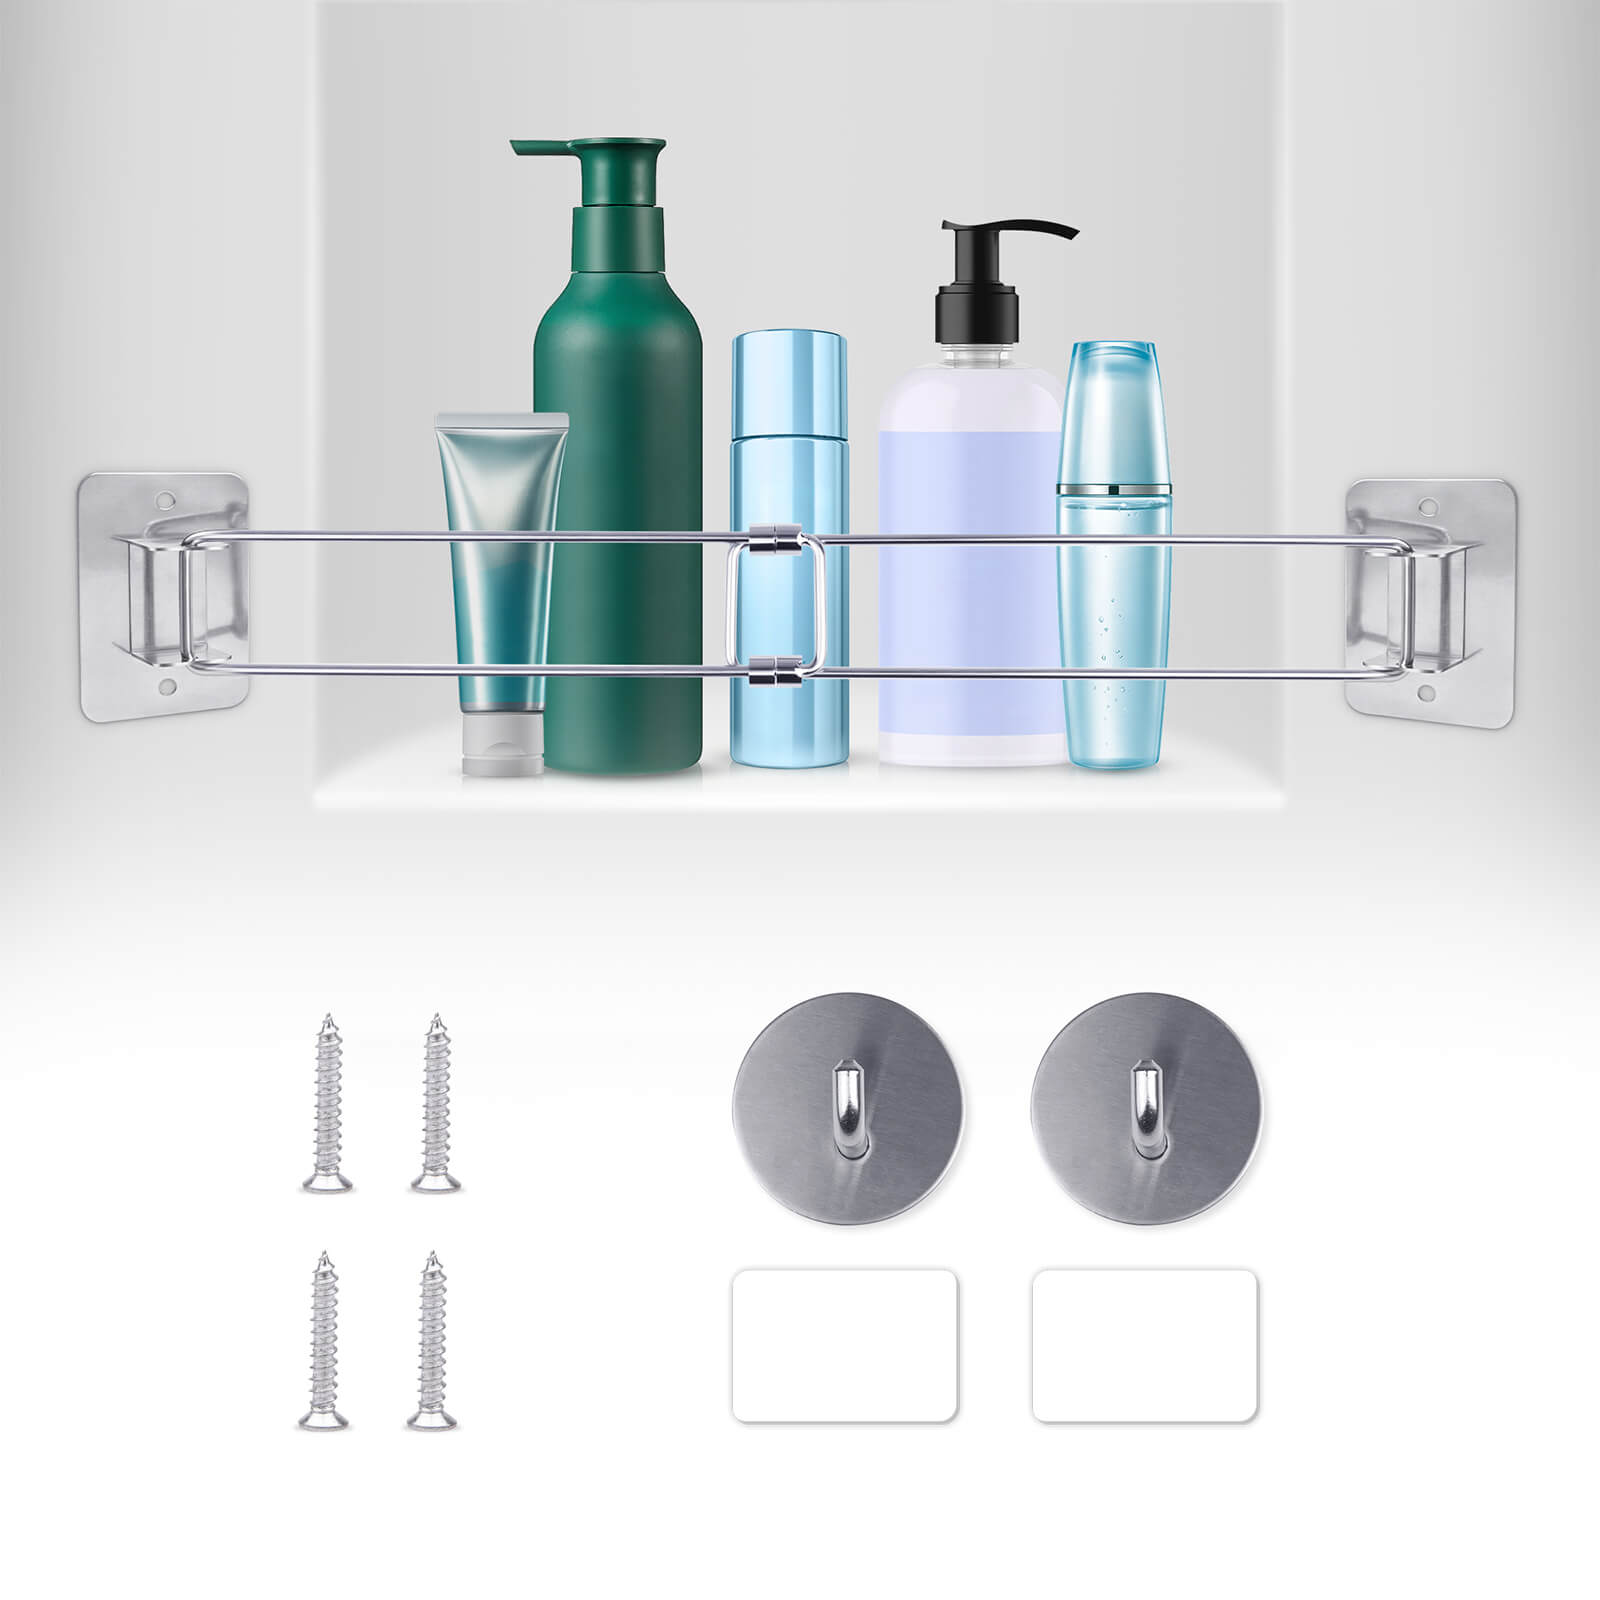 MICTUNING RV Shampoo Bottle Holder Fence Trailer Bathroom Corner Storage Bar,  No Drilling or Screw Mount